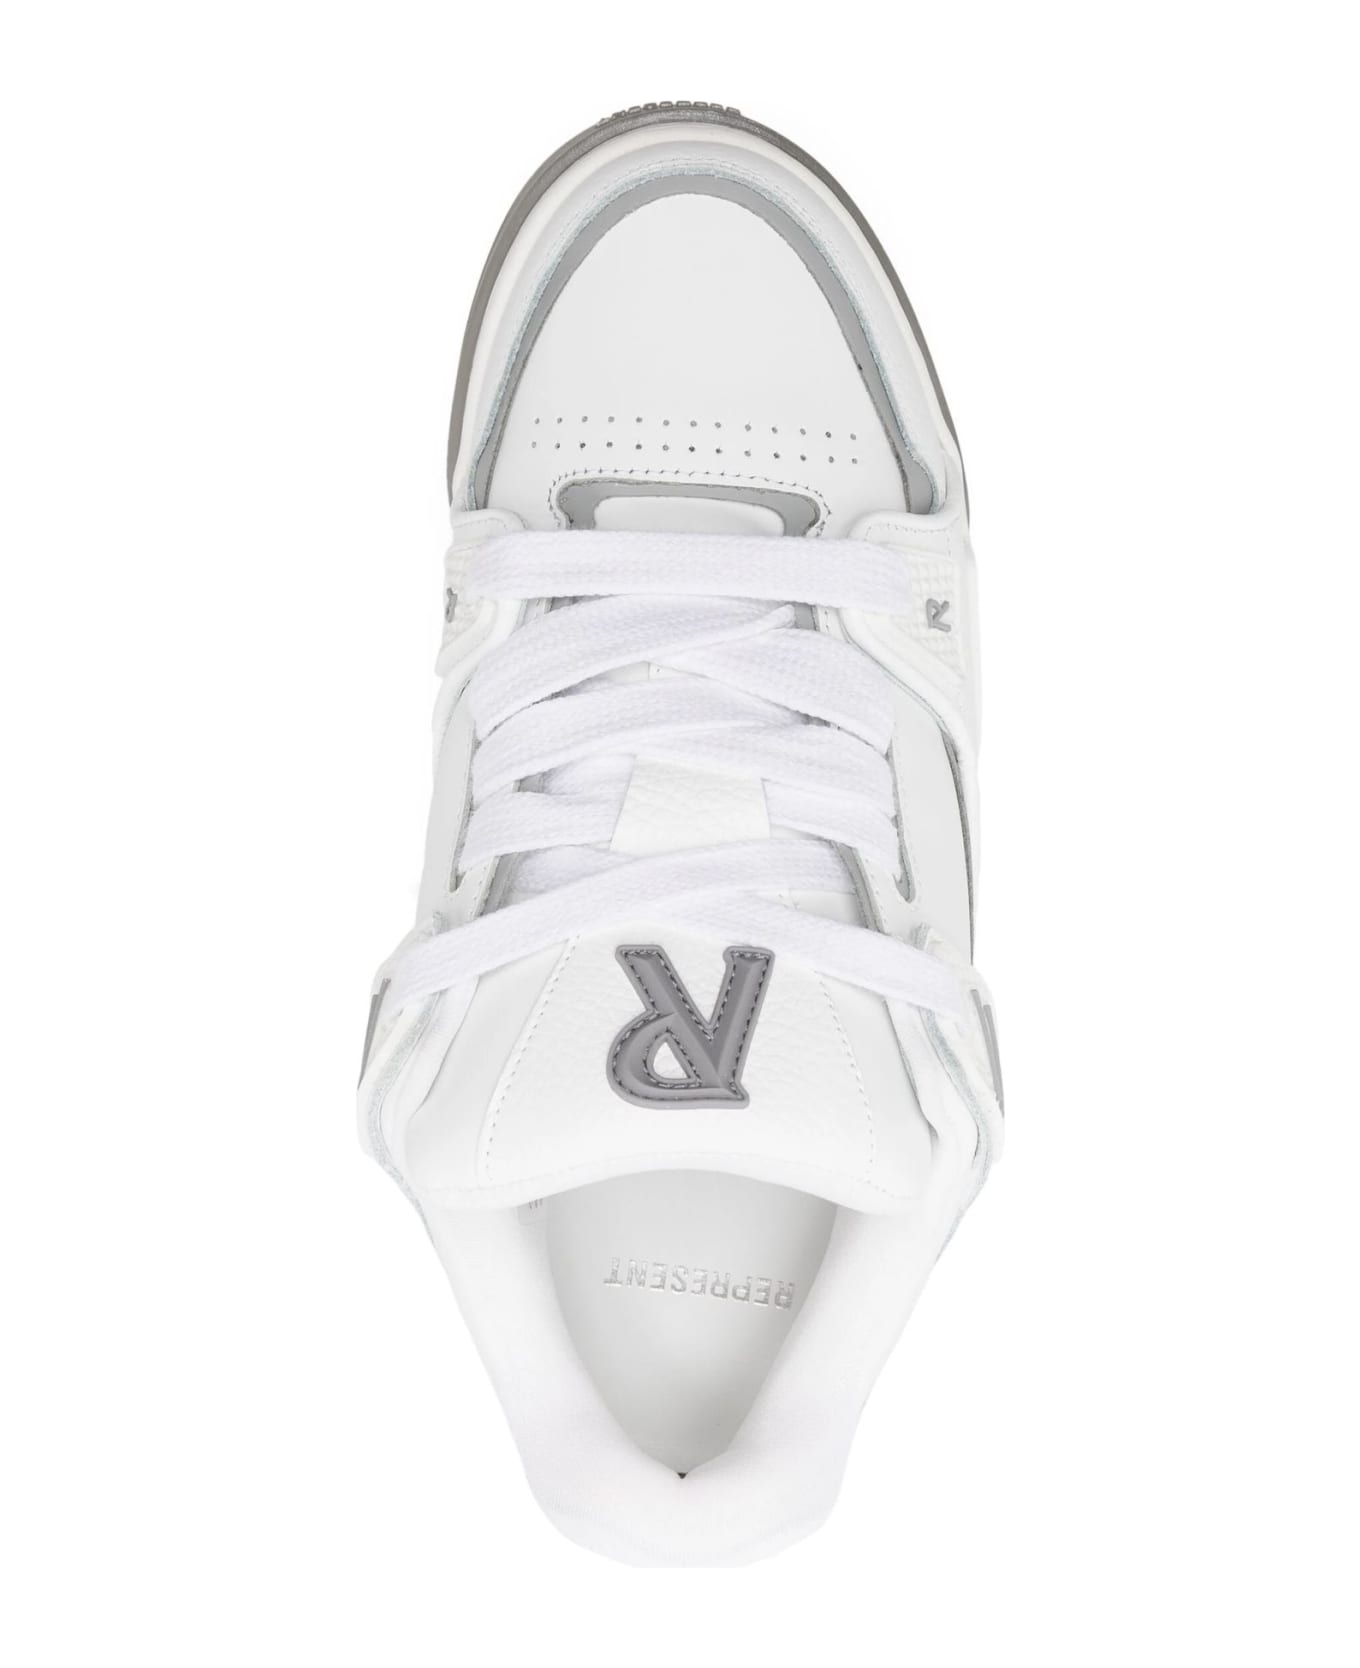 REPRESENT Sneakers White - White